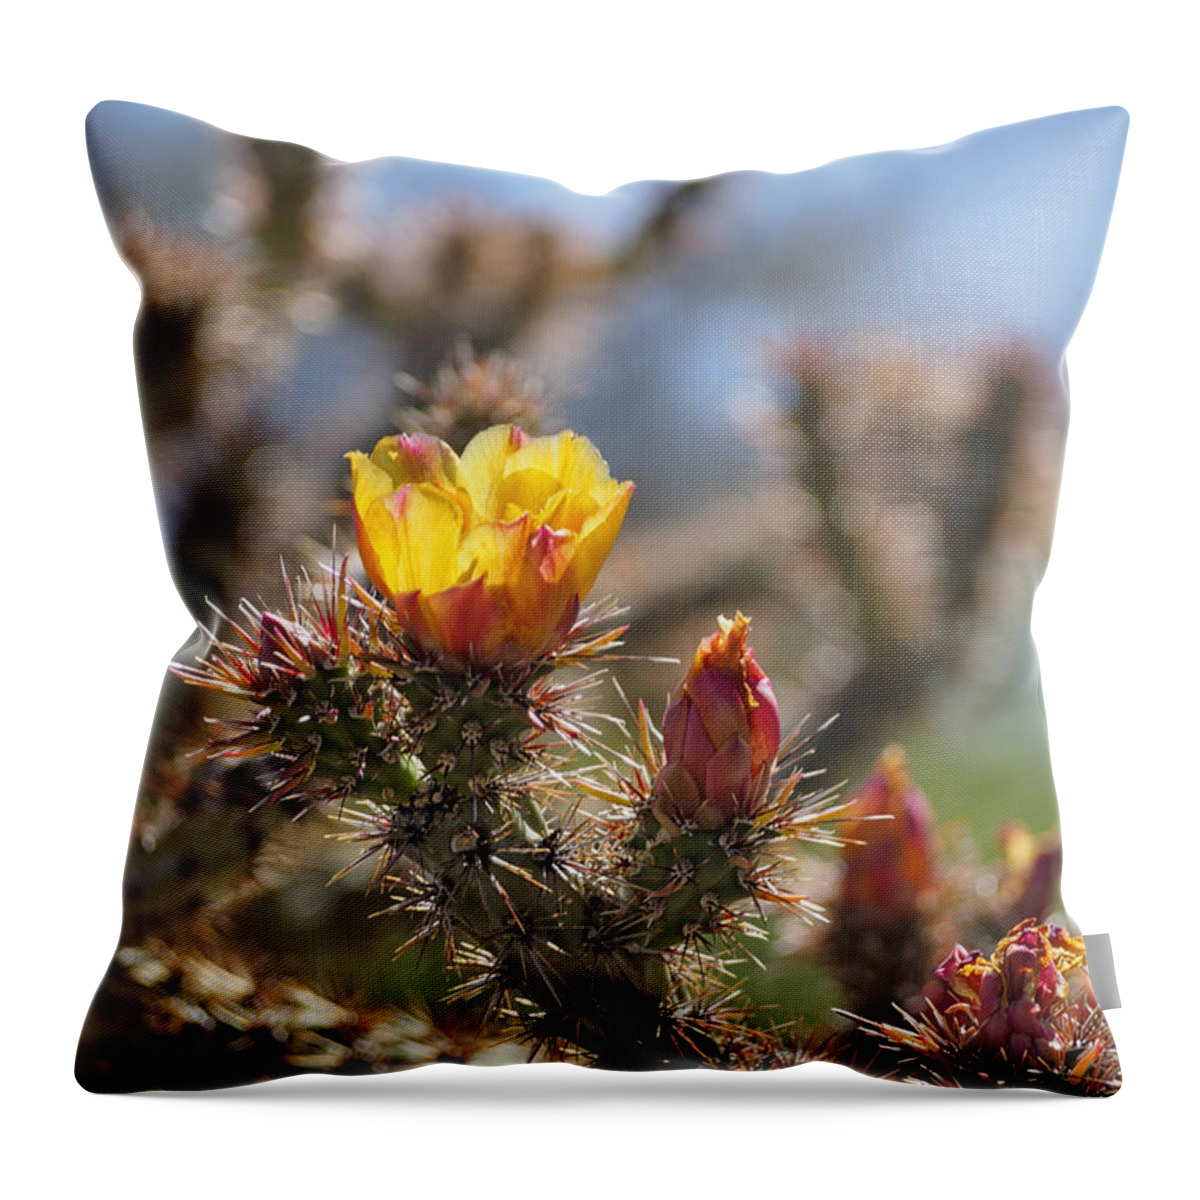 Arizona Throw Pillow featuring the photograph Buckhorn Cholla Cactus Spring Bloom by Marianne Campolongo